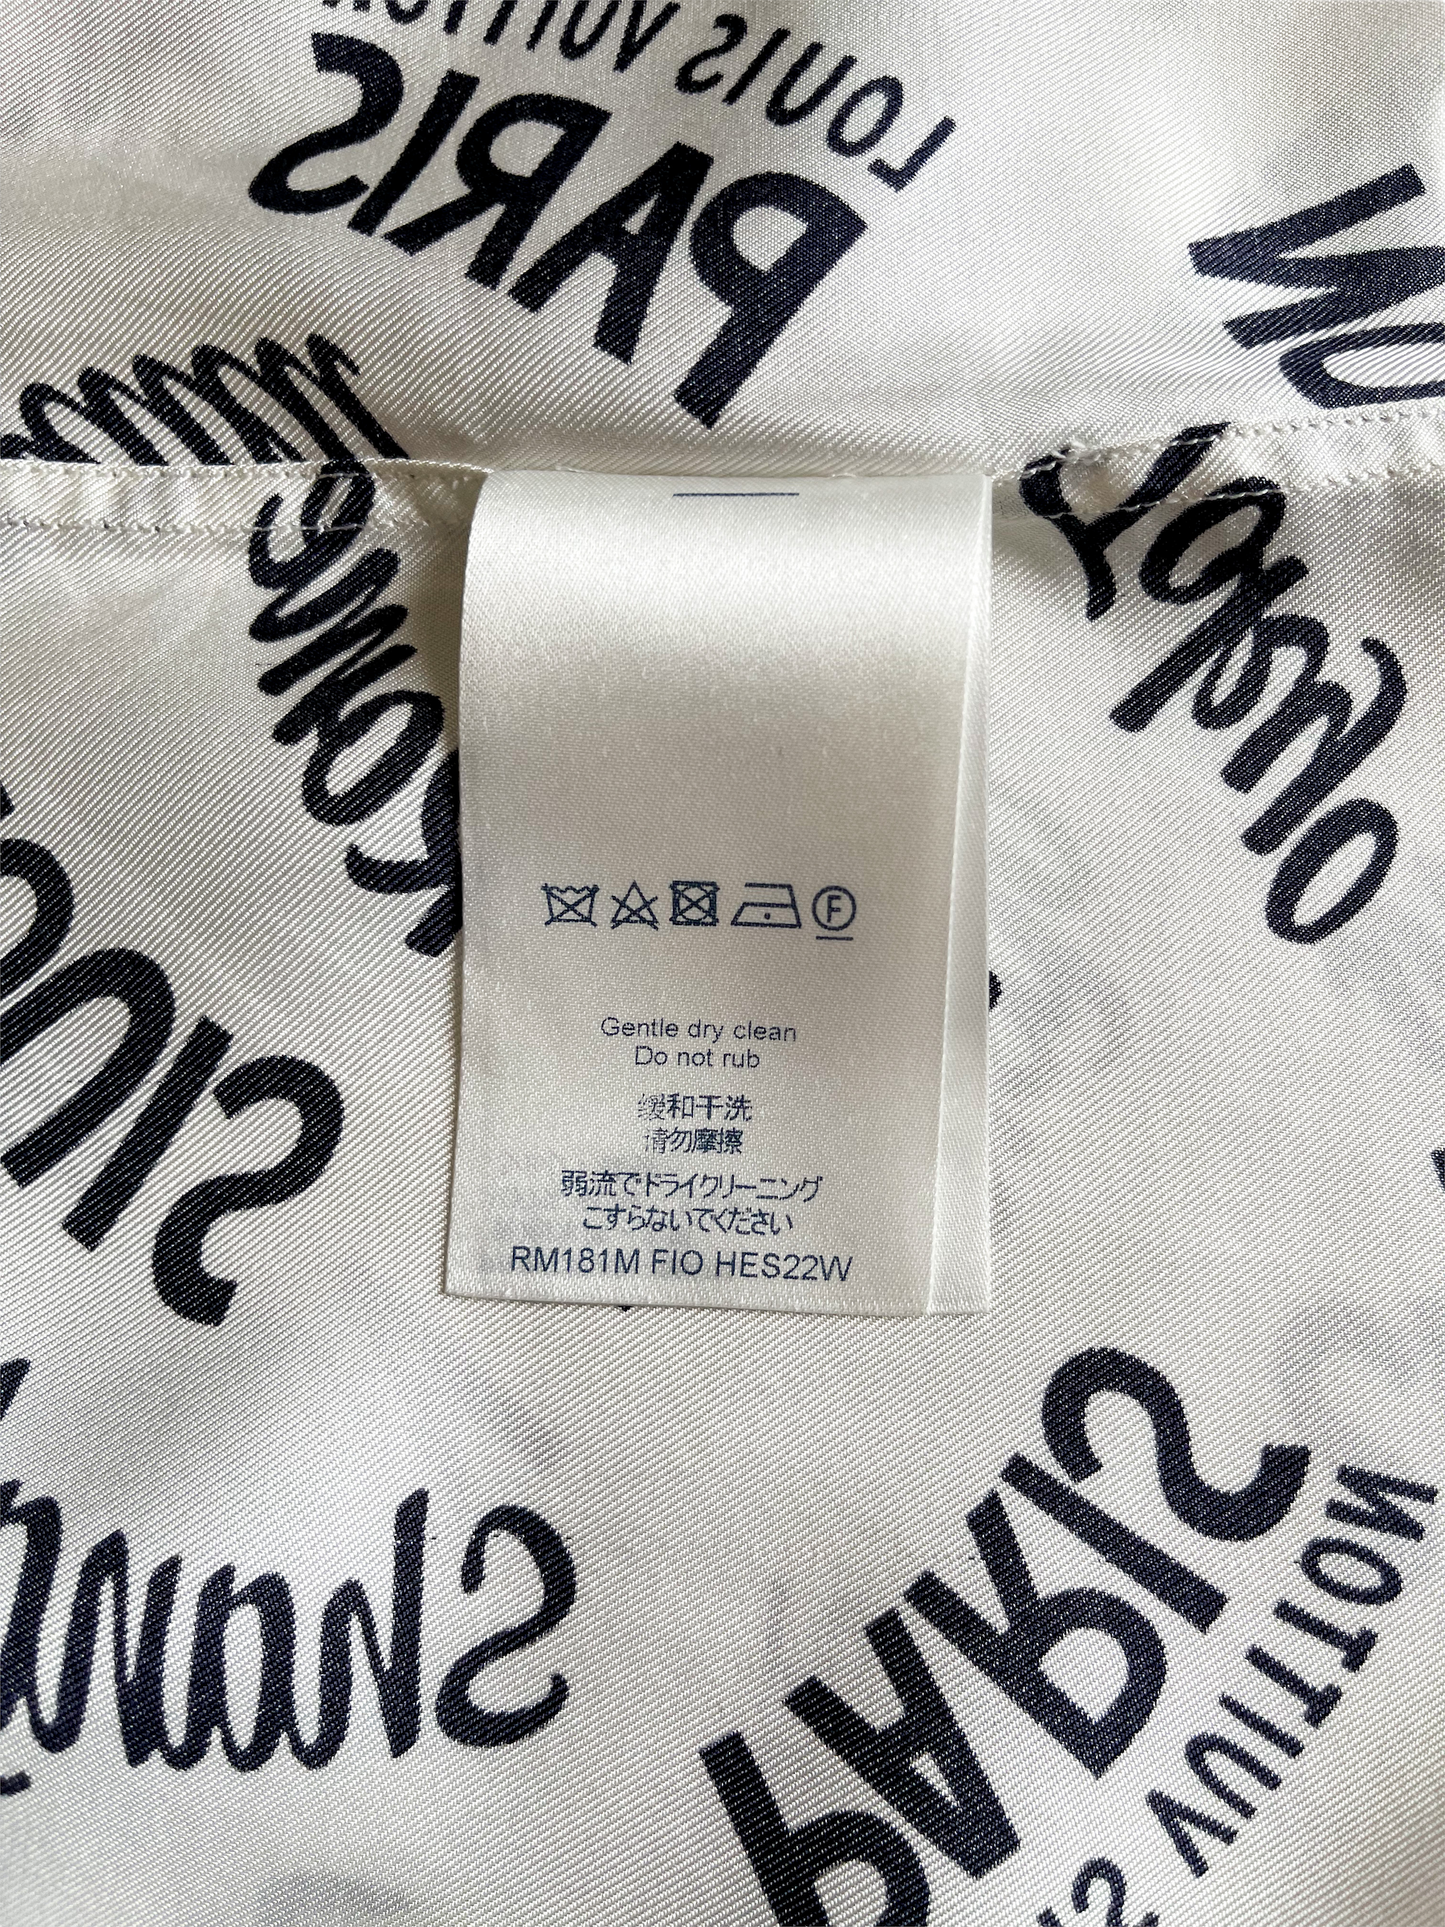 Silk t-shirt Louis Vuitton White size XL International in Silk